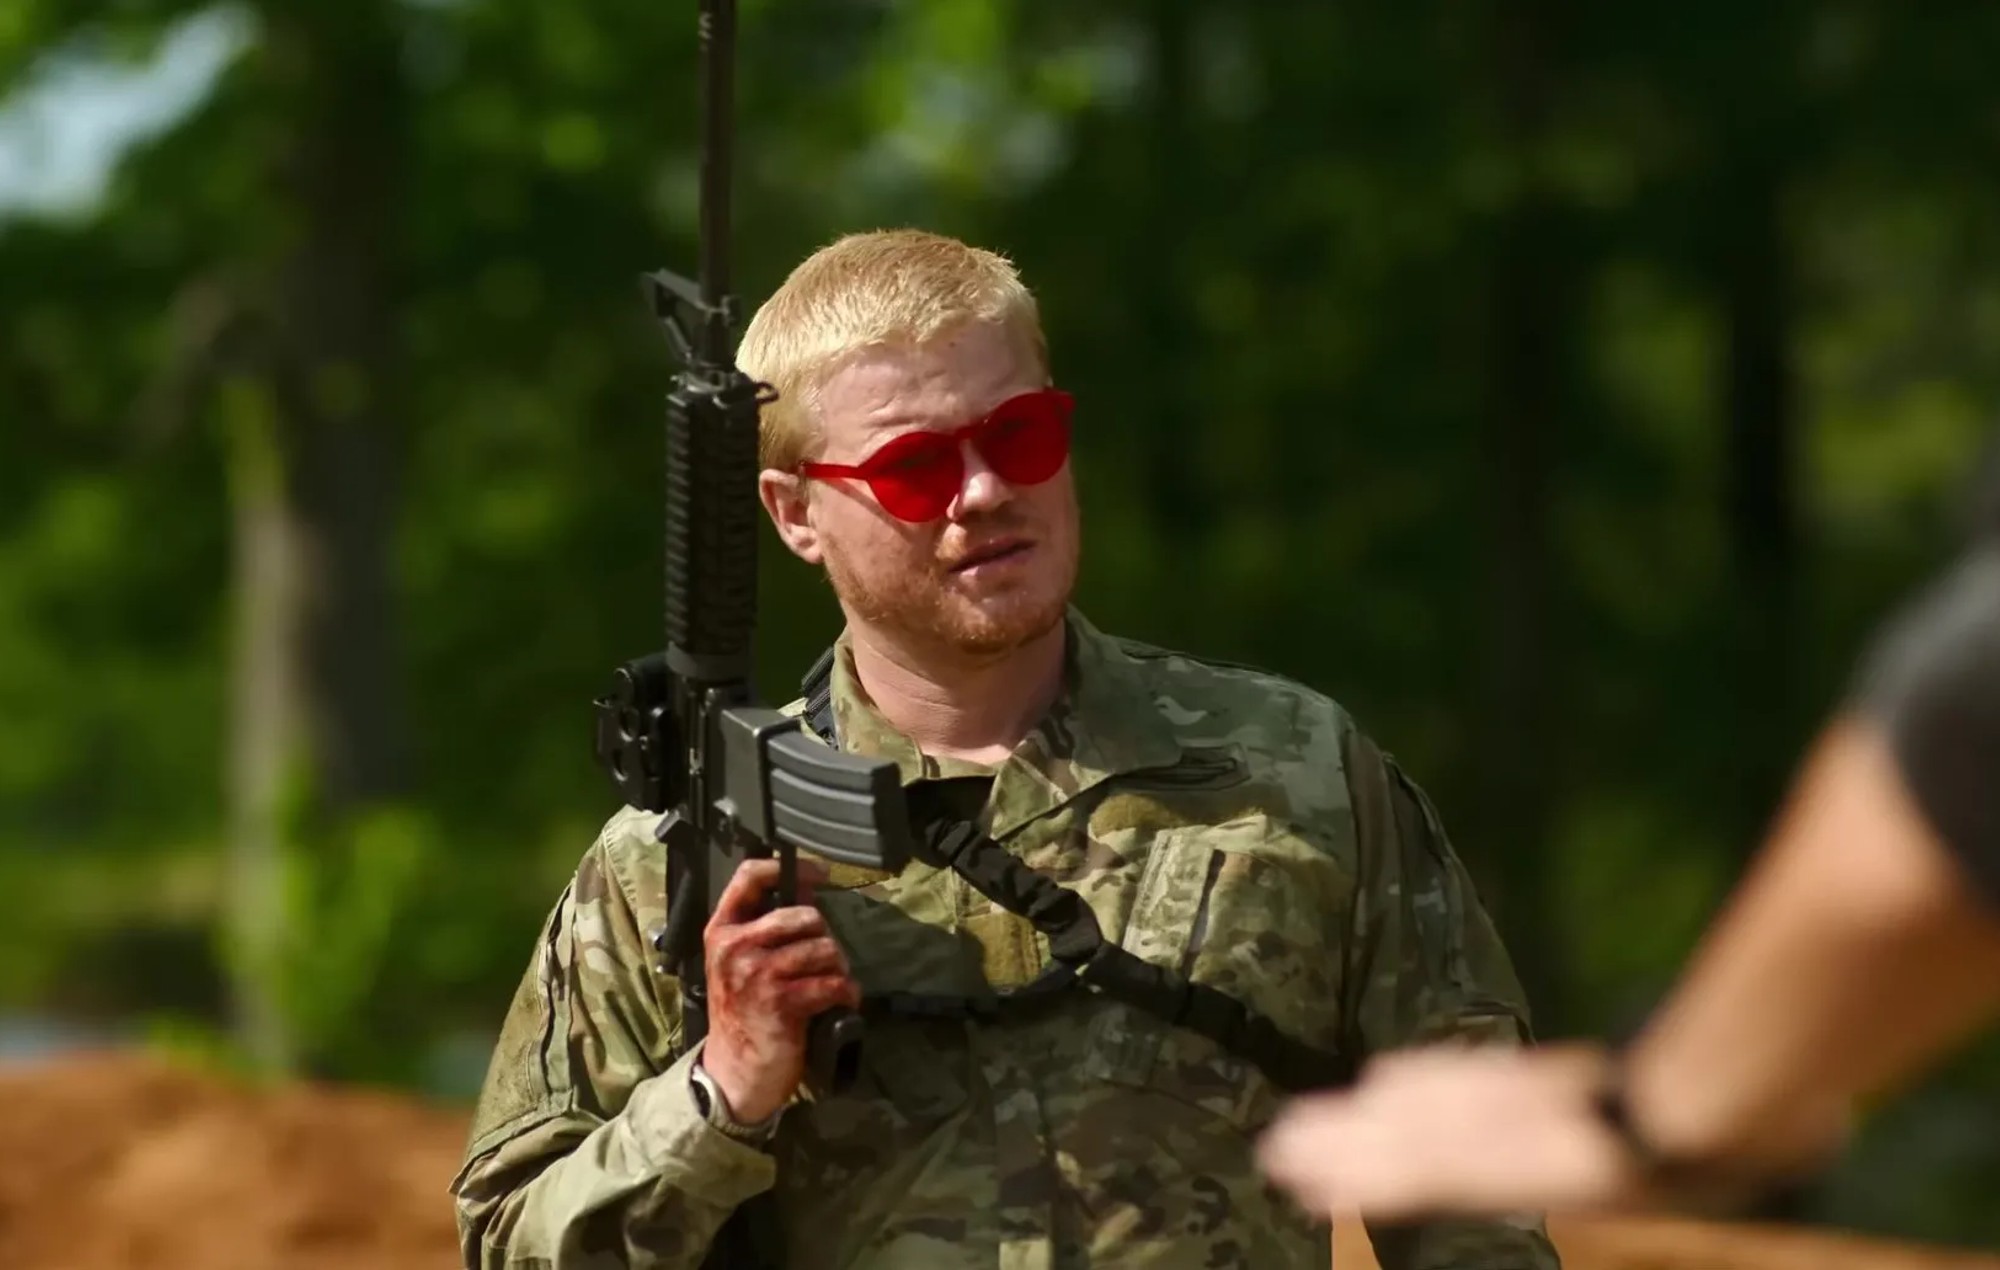 Why is Jesse Plemons wearing red sunglasses in ‘Civil War’?